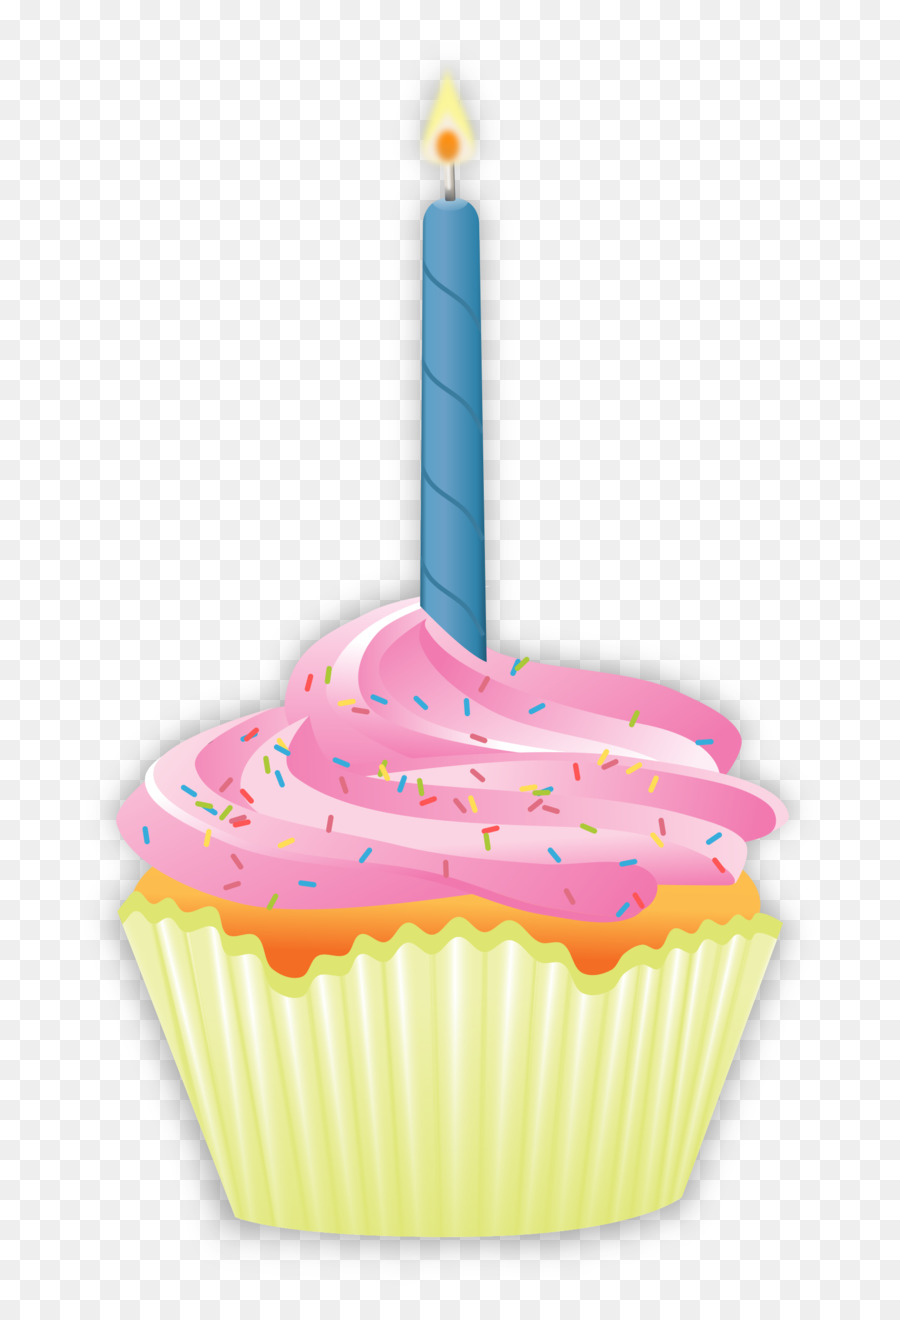 Cupcake Birthday cake Muffin Clip art - cup cake png download - 1652*2400 - Free Transparent Cupcake png Download.